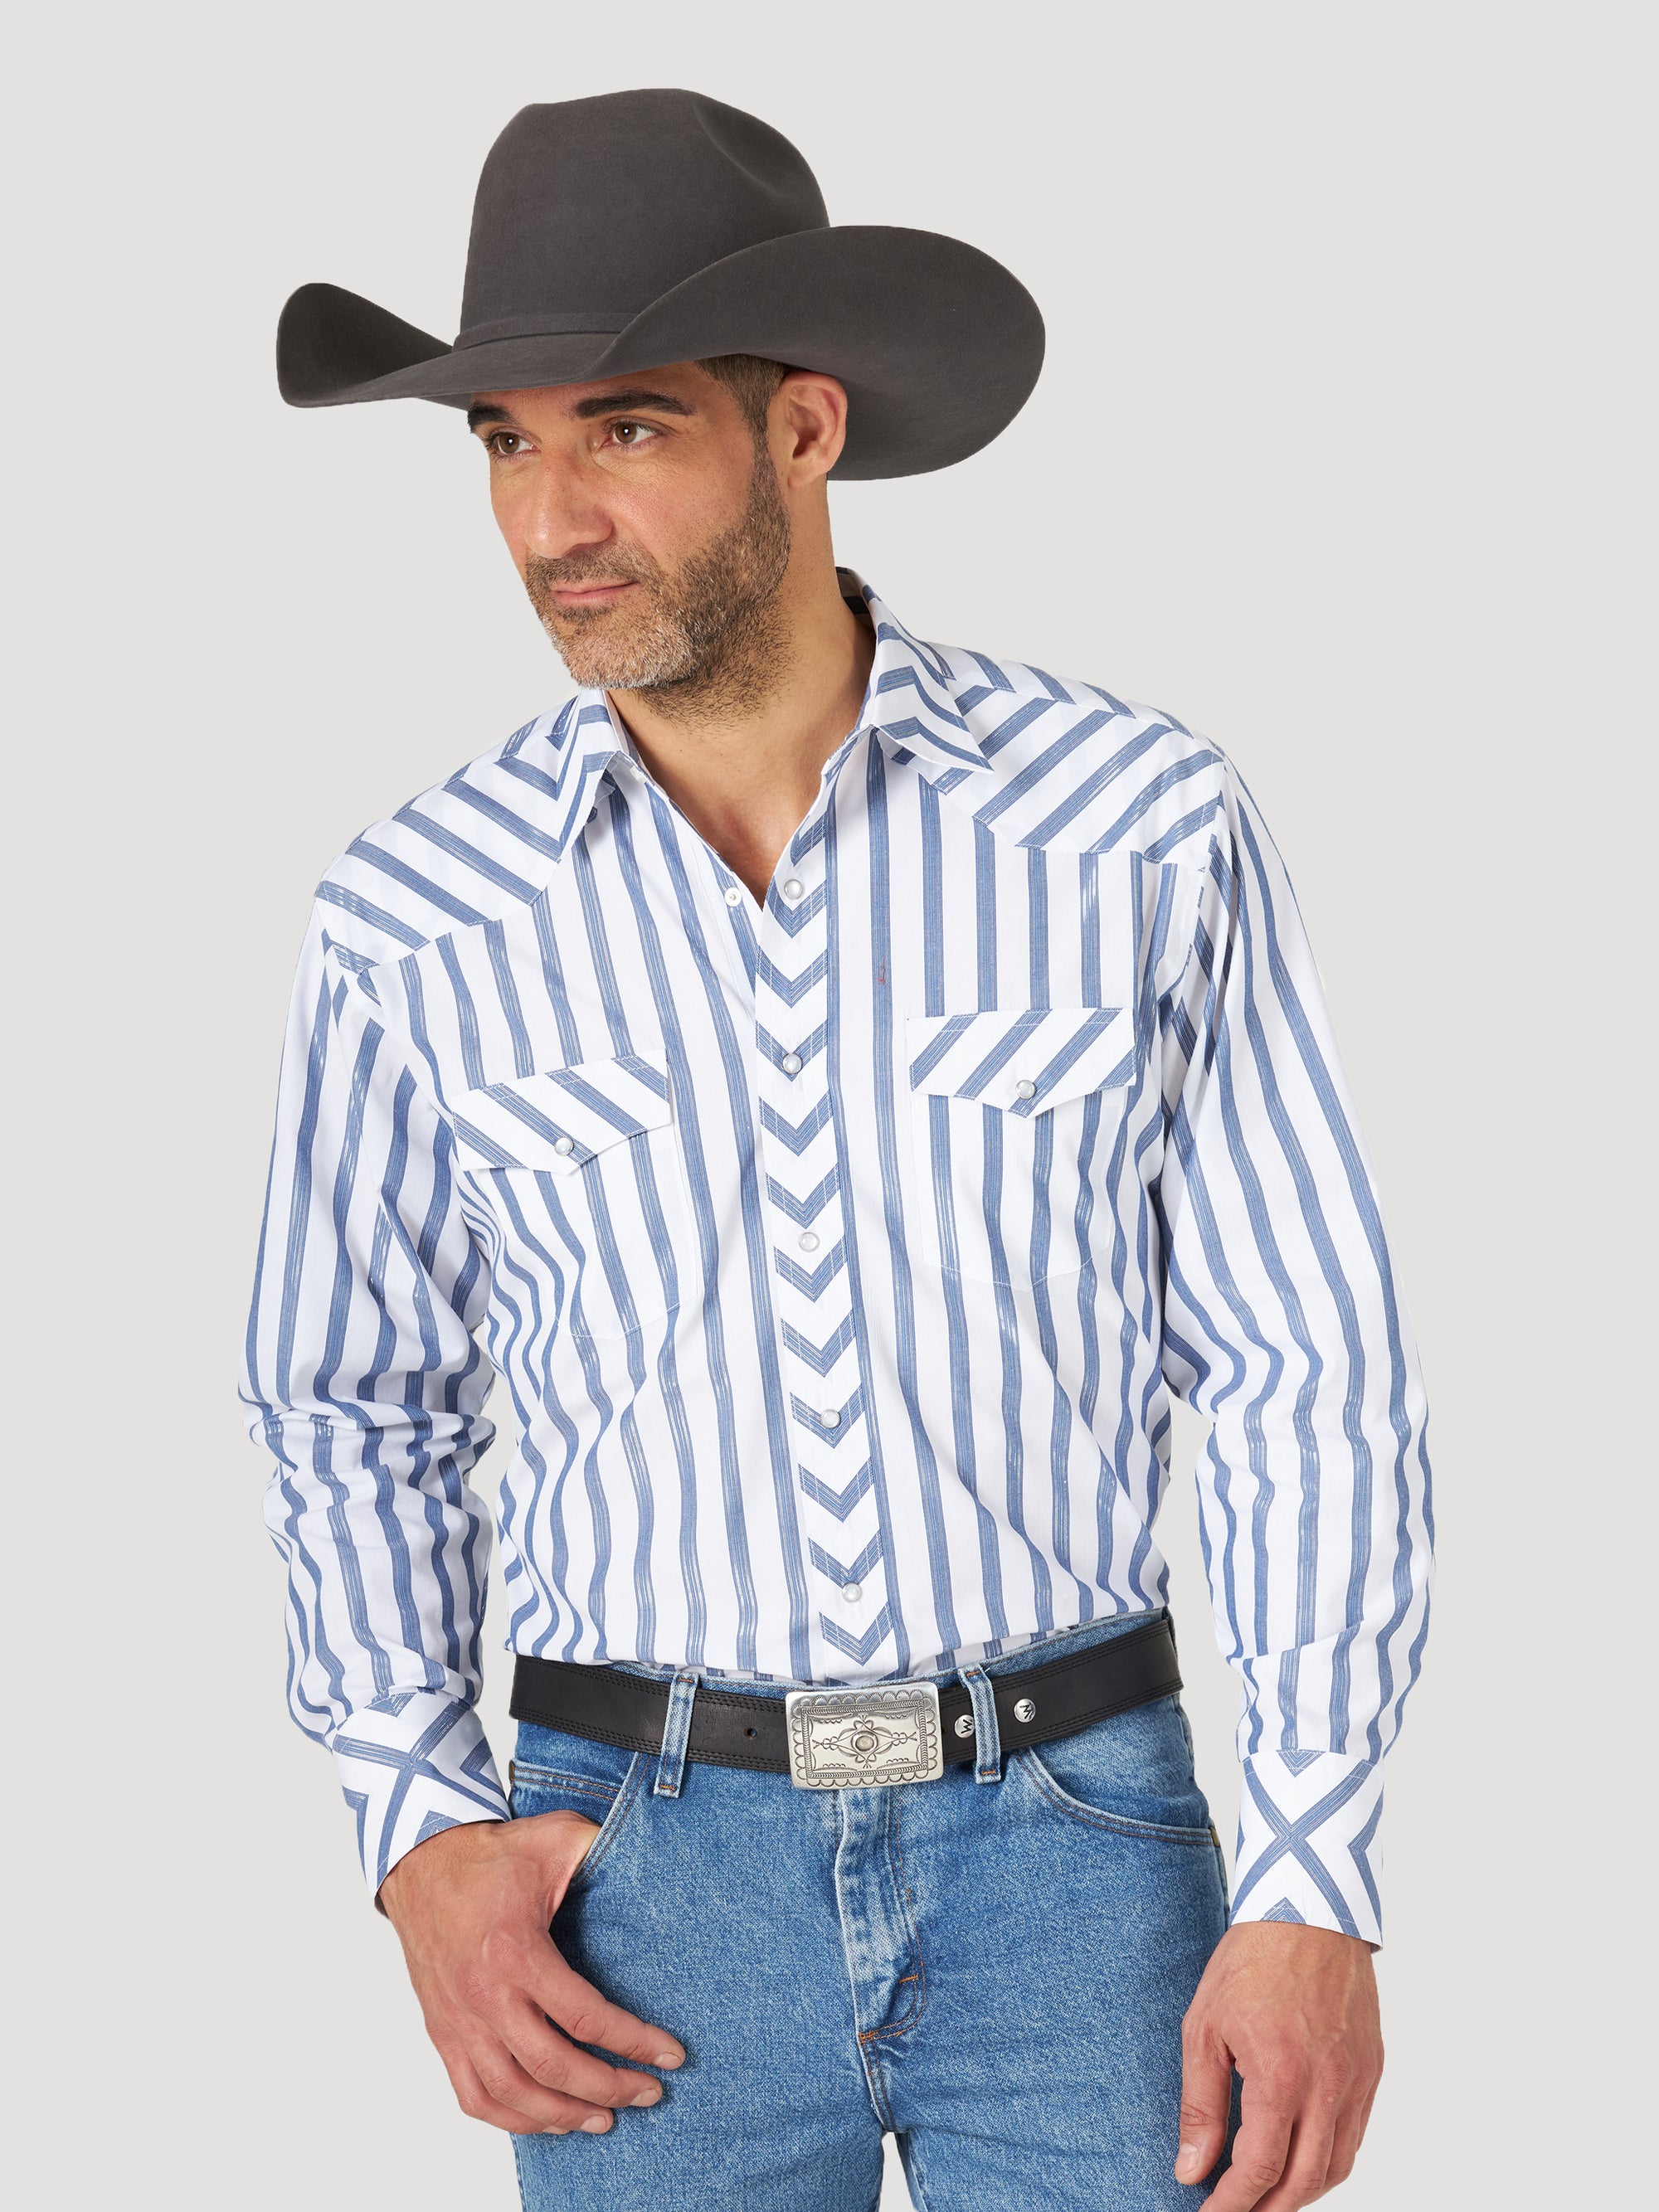 Wrangler Men's Silver Edition Long Sleeve Snap Shirt White Blue